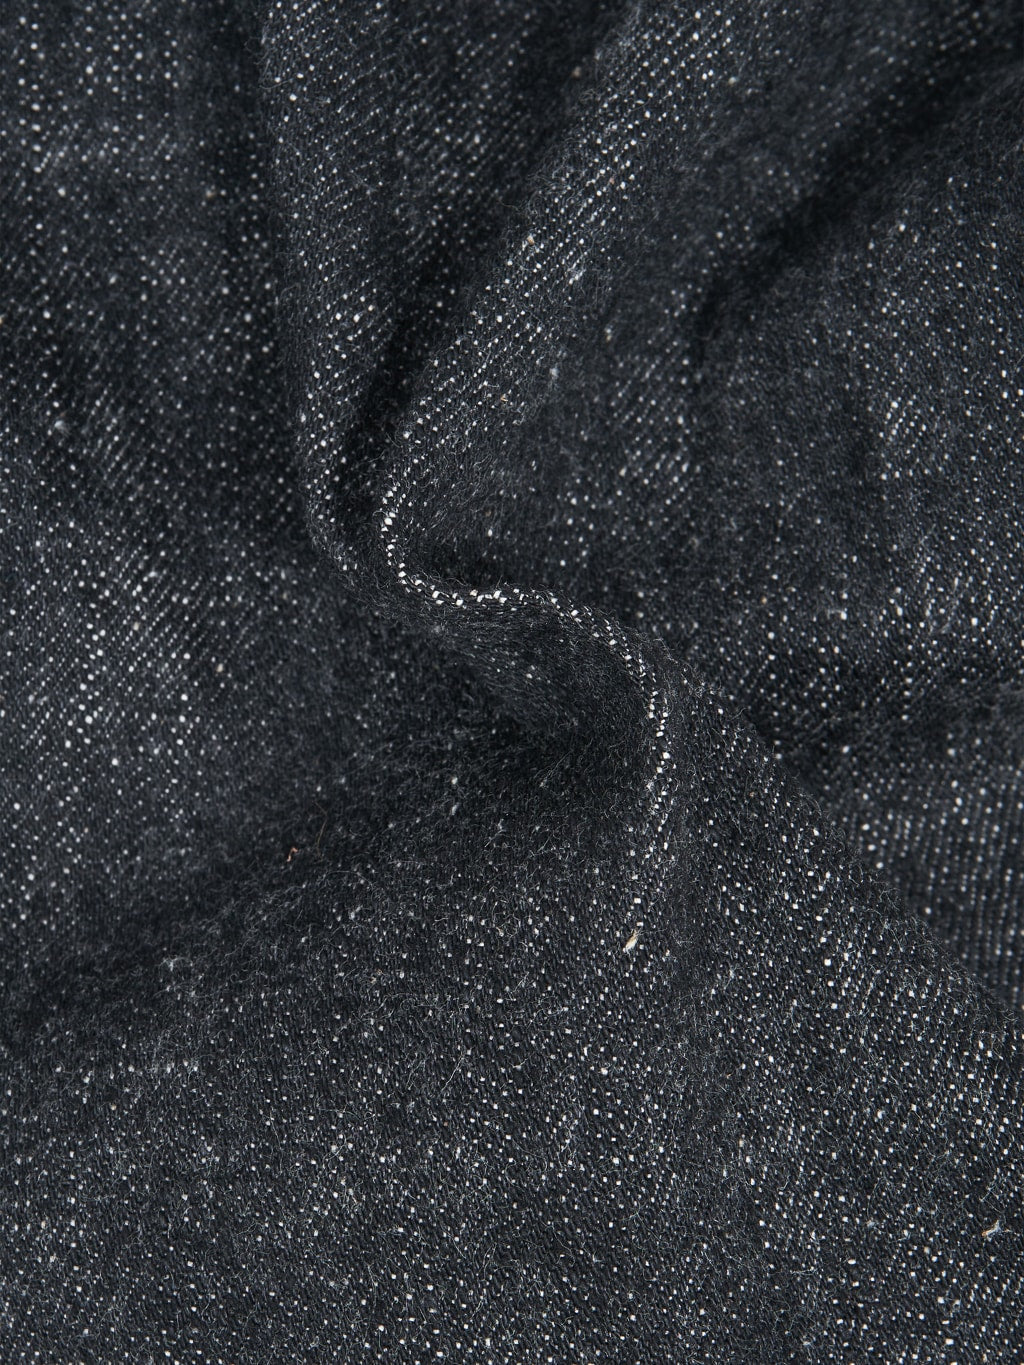 Samurai Jeans S211BK Koku Benkei 17oz Slubby Black Relaxed Tapered Jeans texture